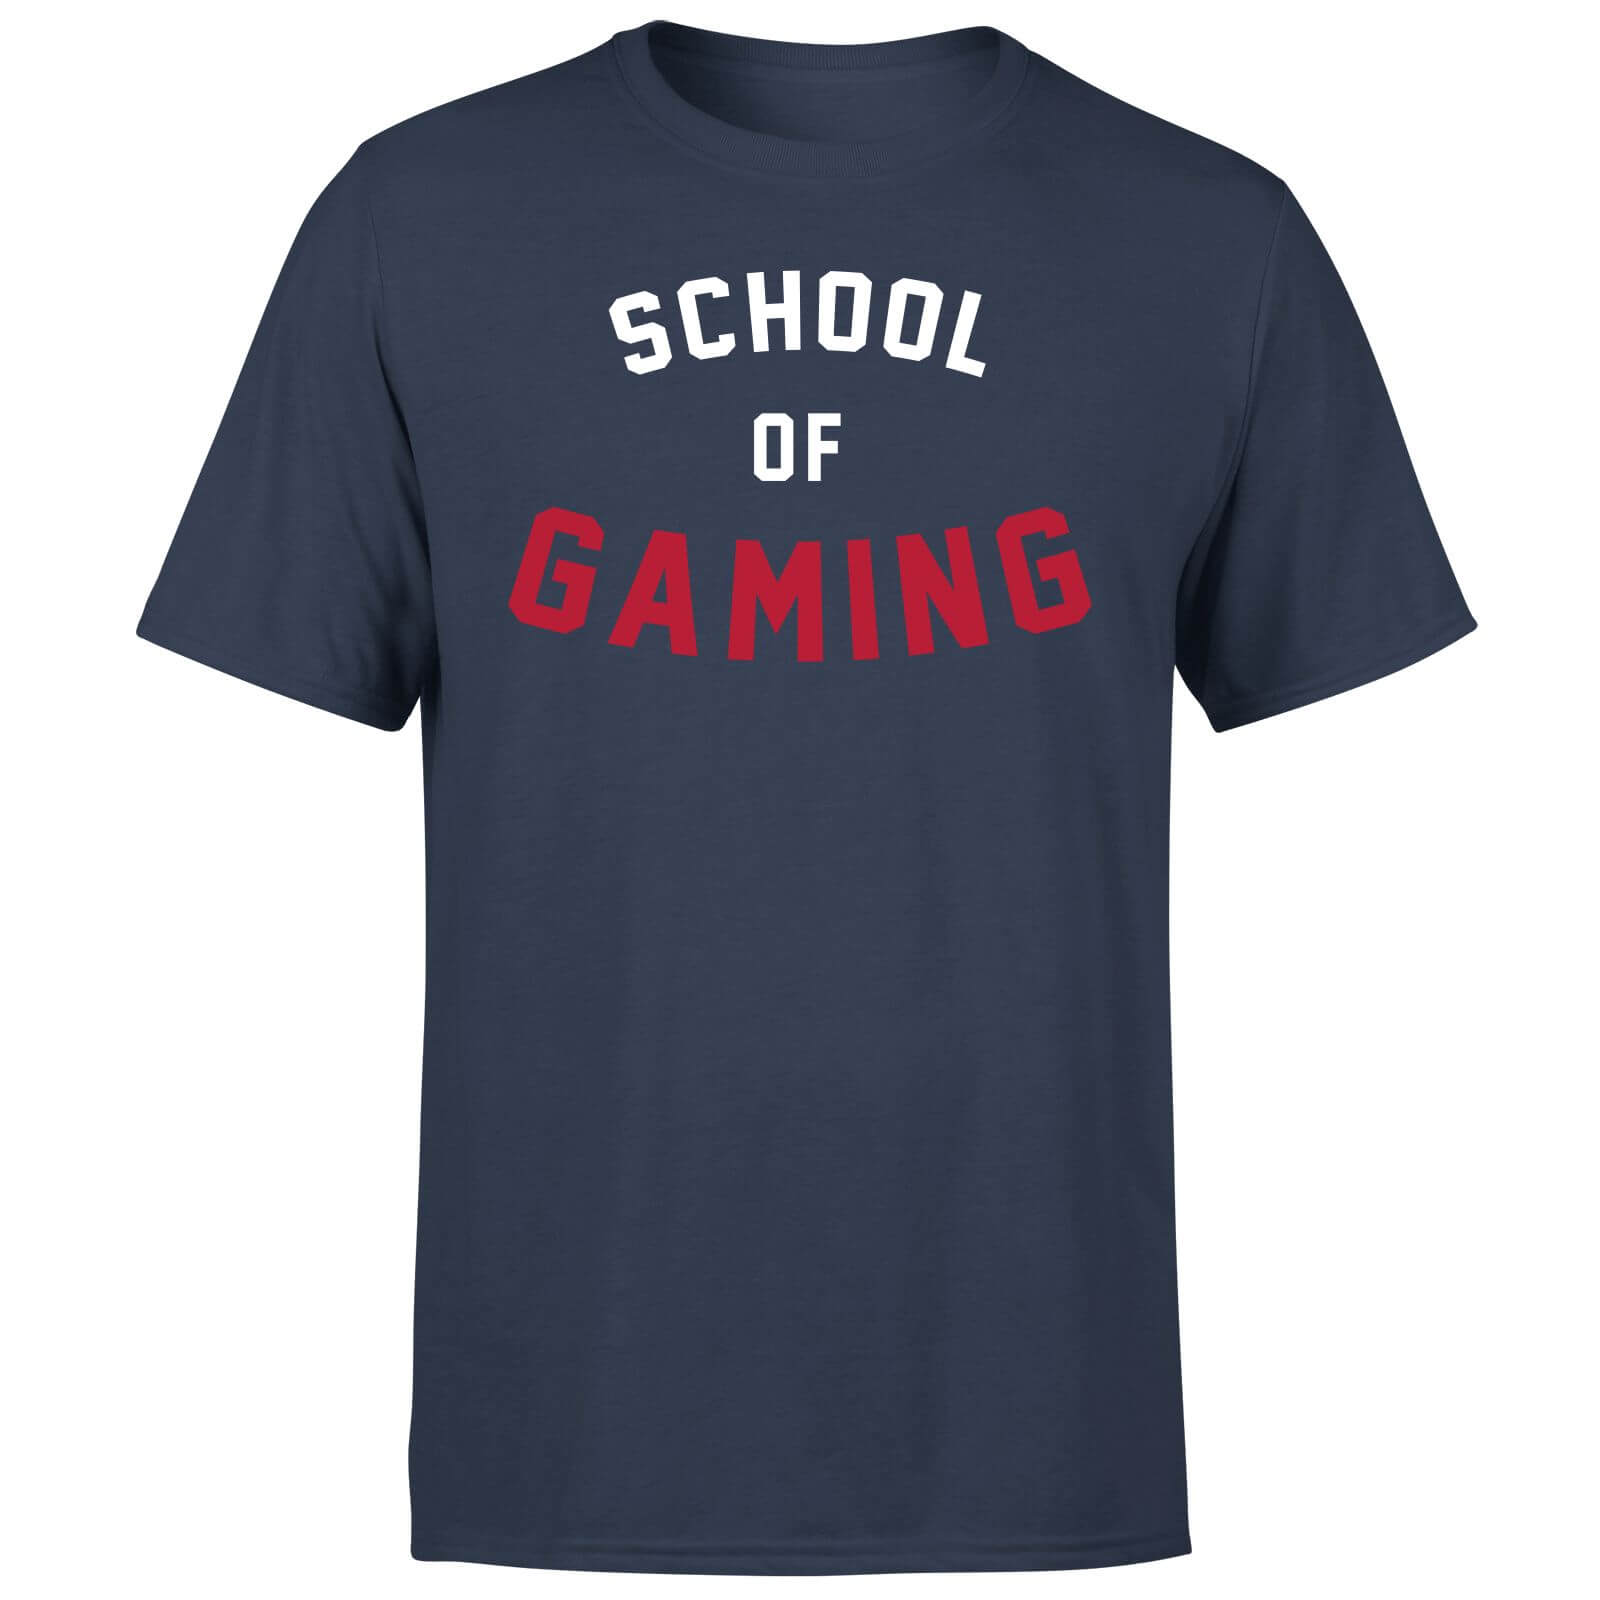 School of Gaming T-Shirt - Navy - M - Navy